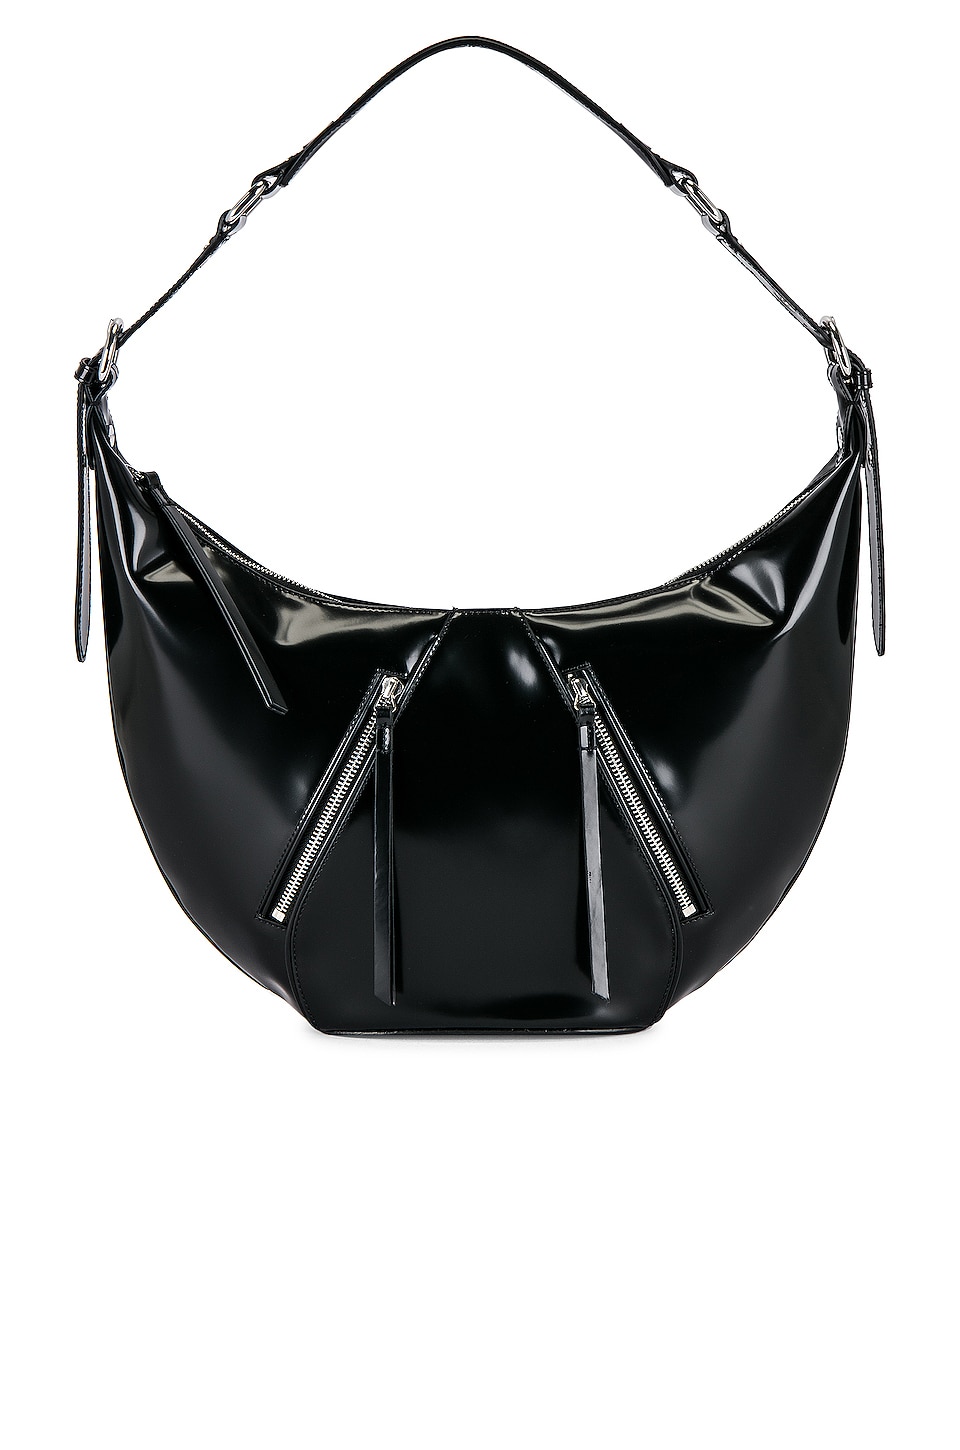 Belay Shoulder Bag in Black. Revolve Women Accessories Bags Clutches 